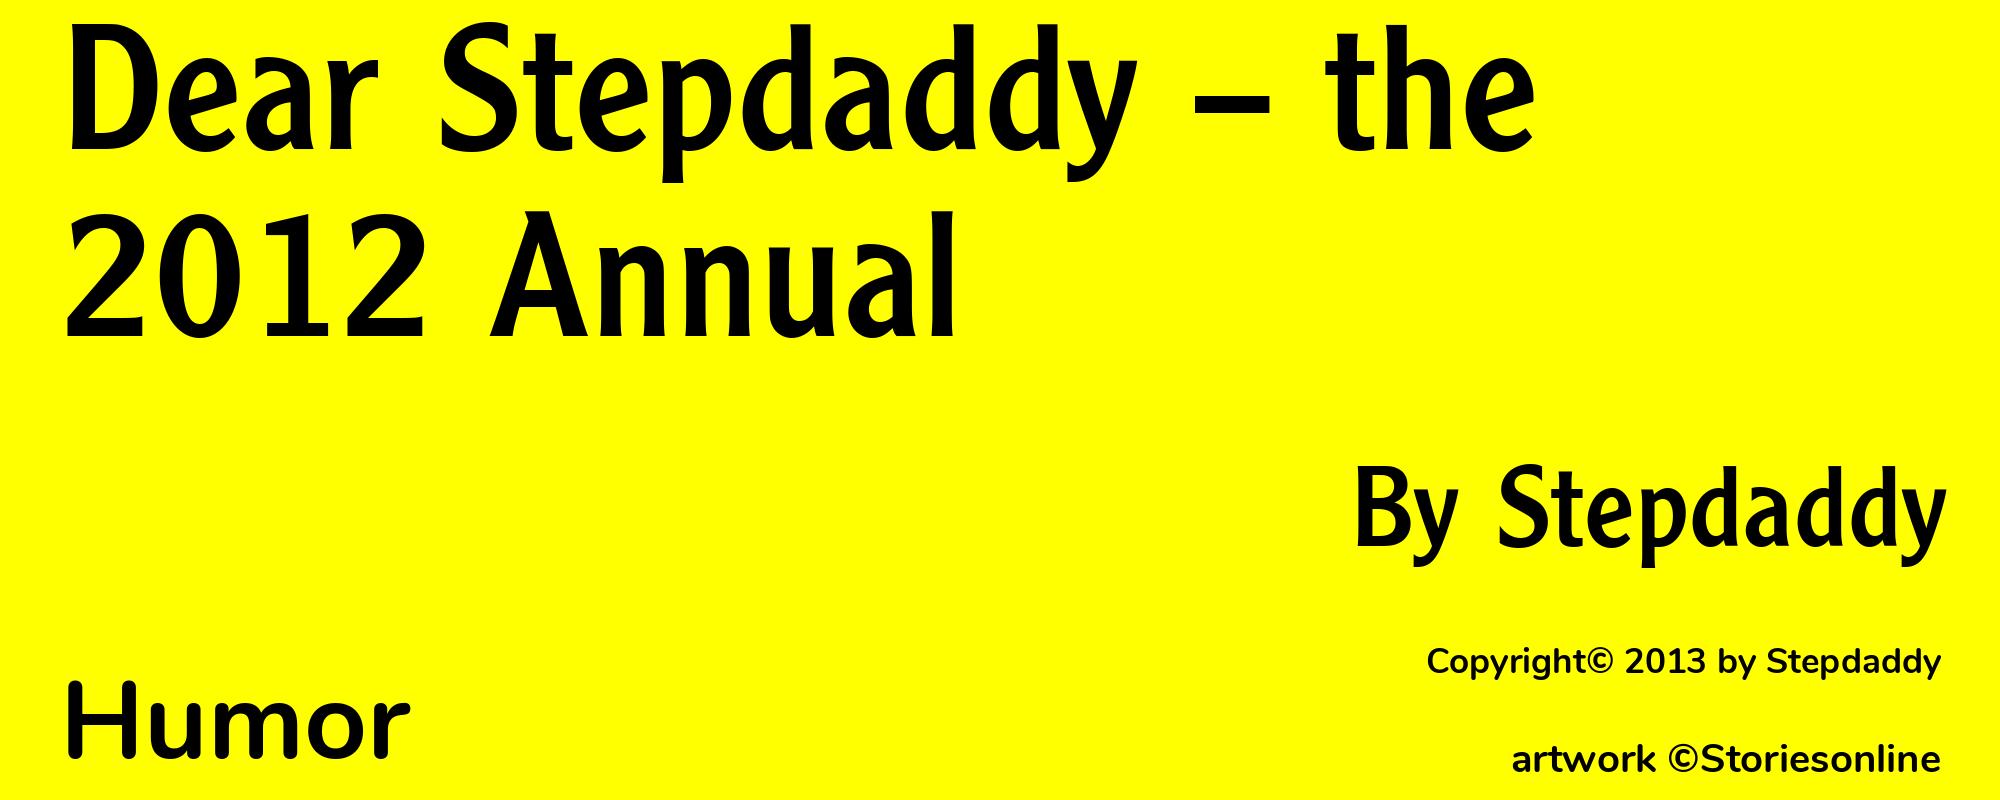 Dear Stepdaddy -- the 2012 Annual - Cover